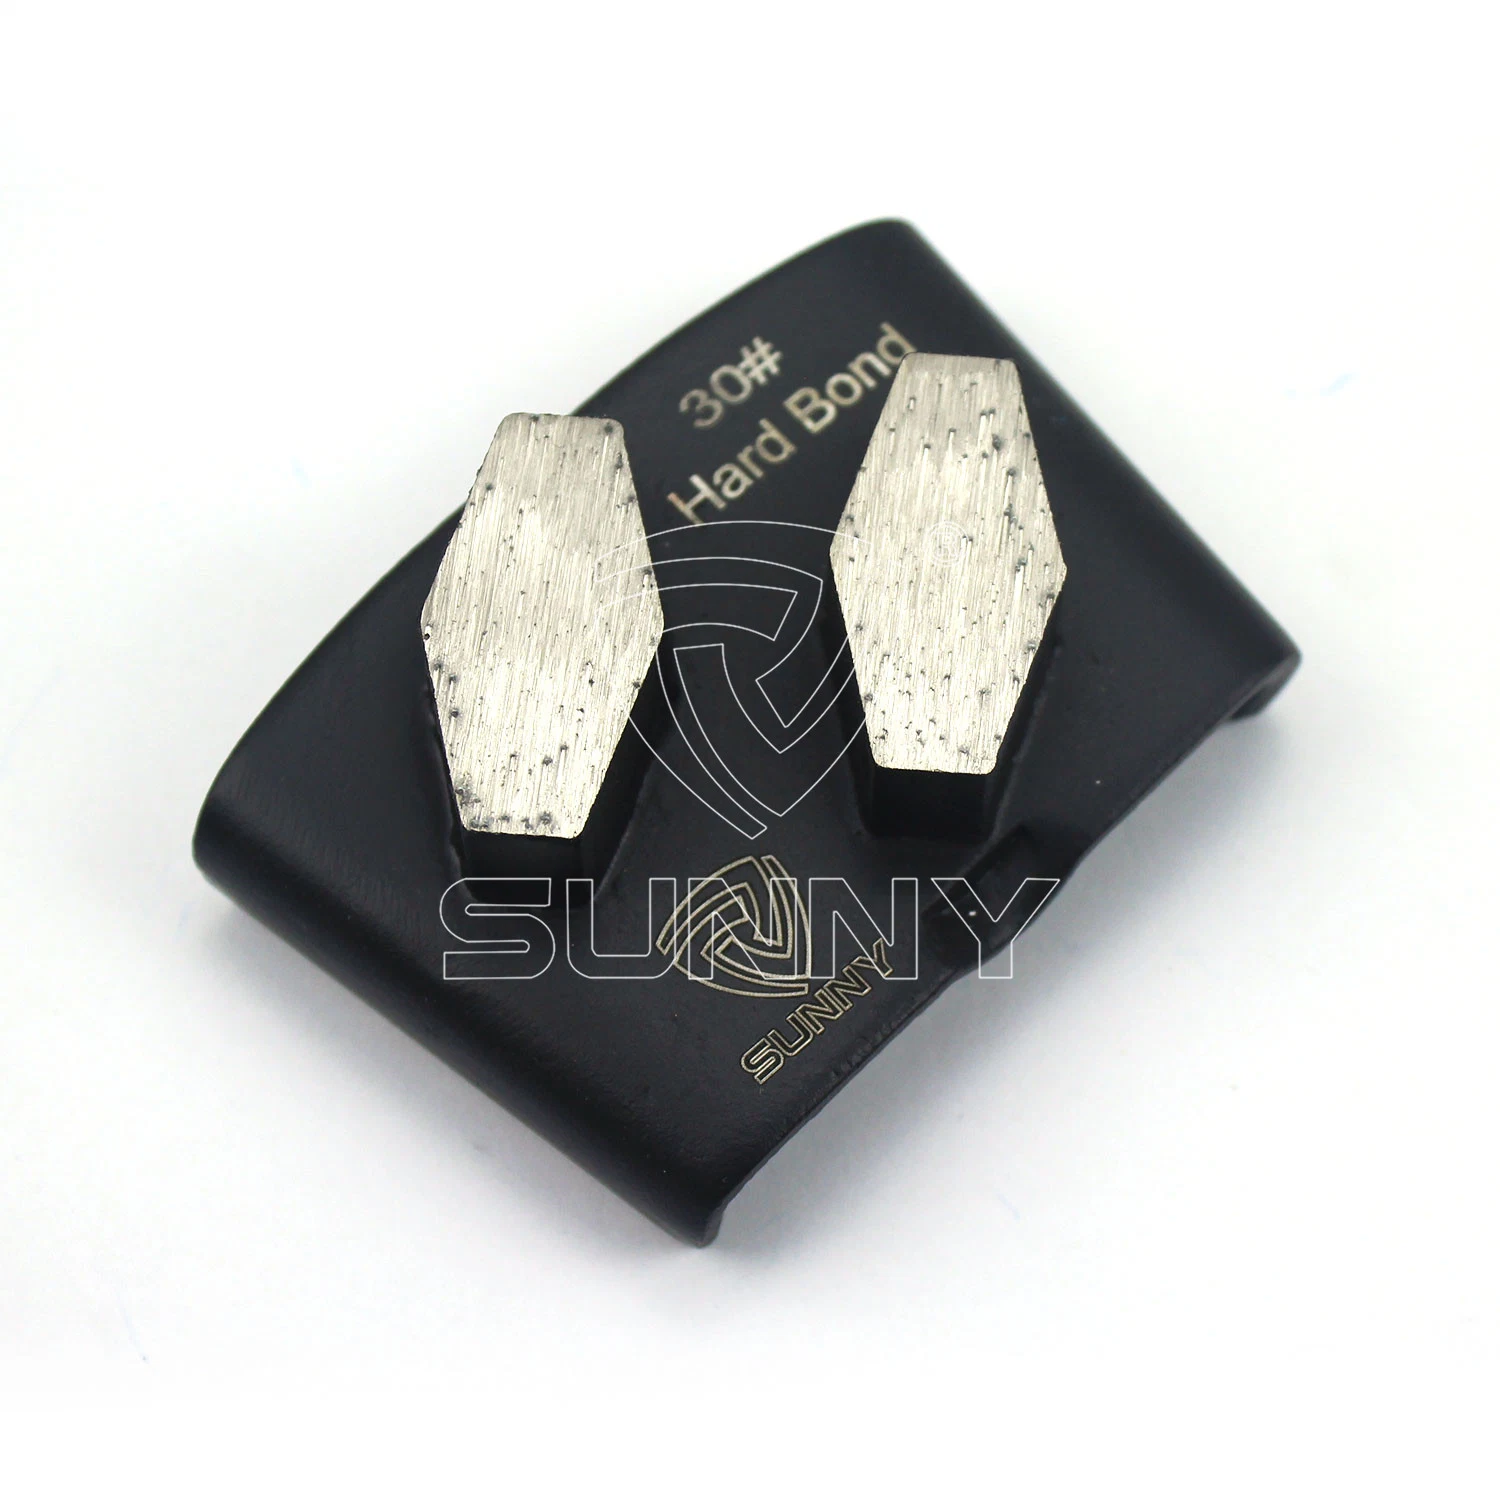 Concrete Grinding Shoes HTC Diamond Stone for Concrete Grinding